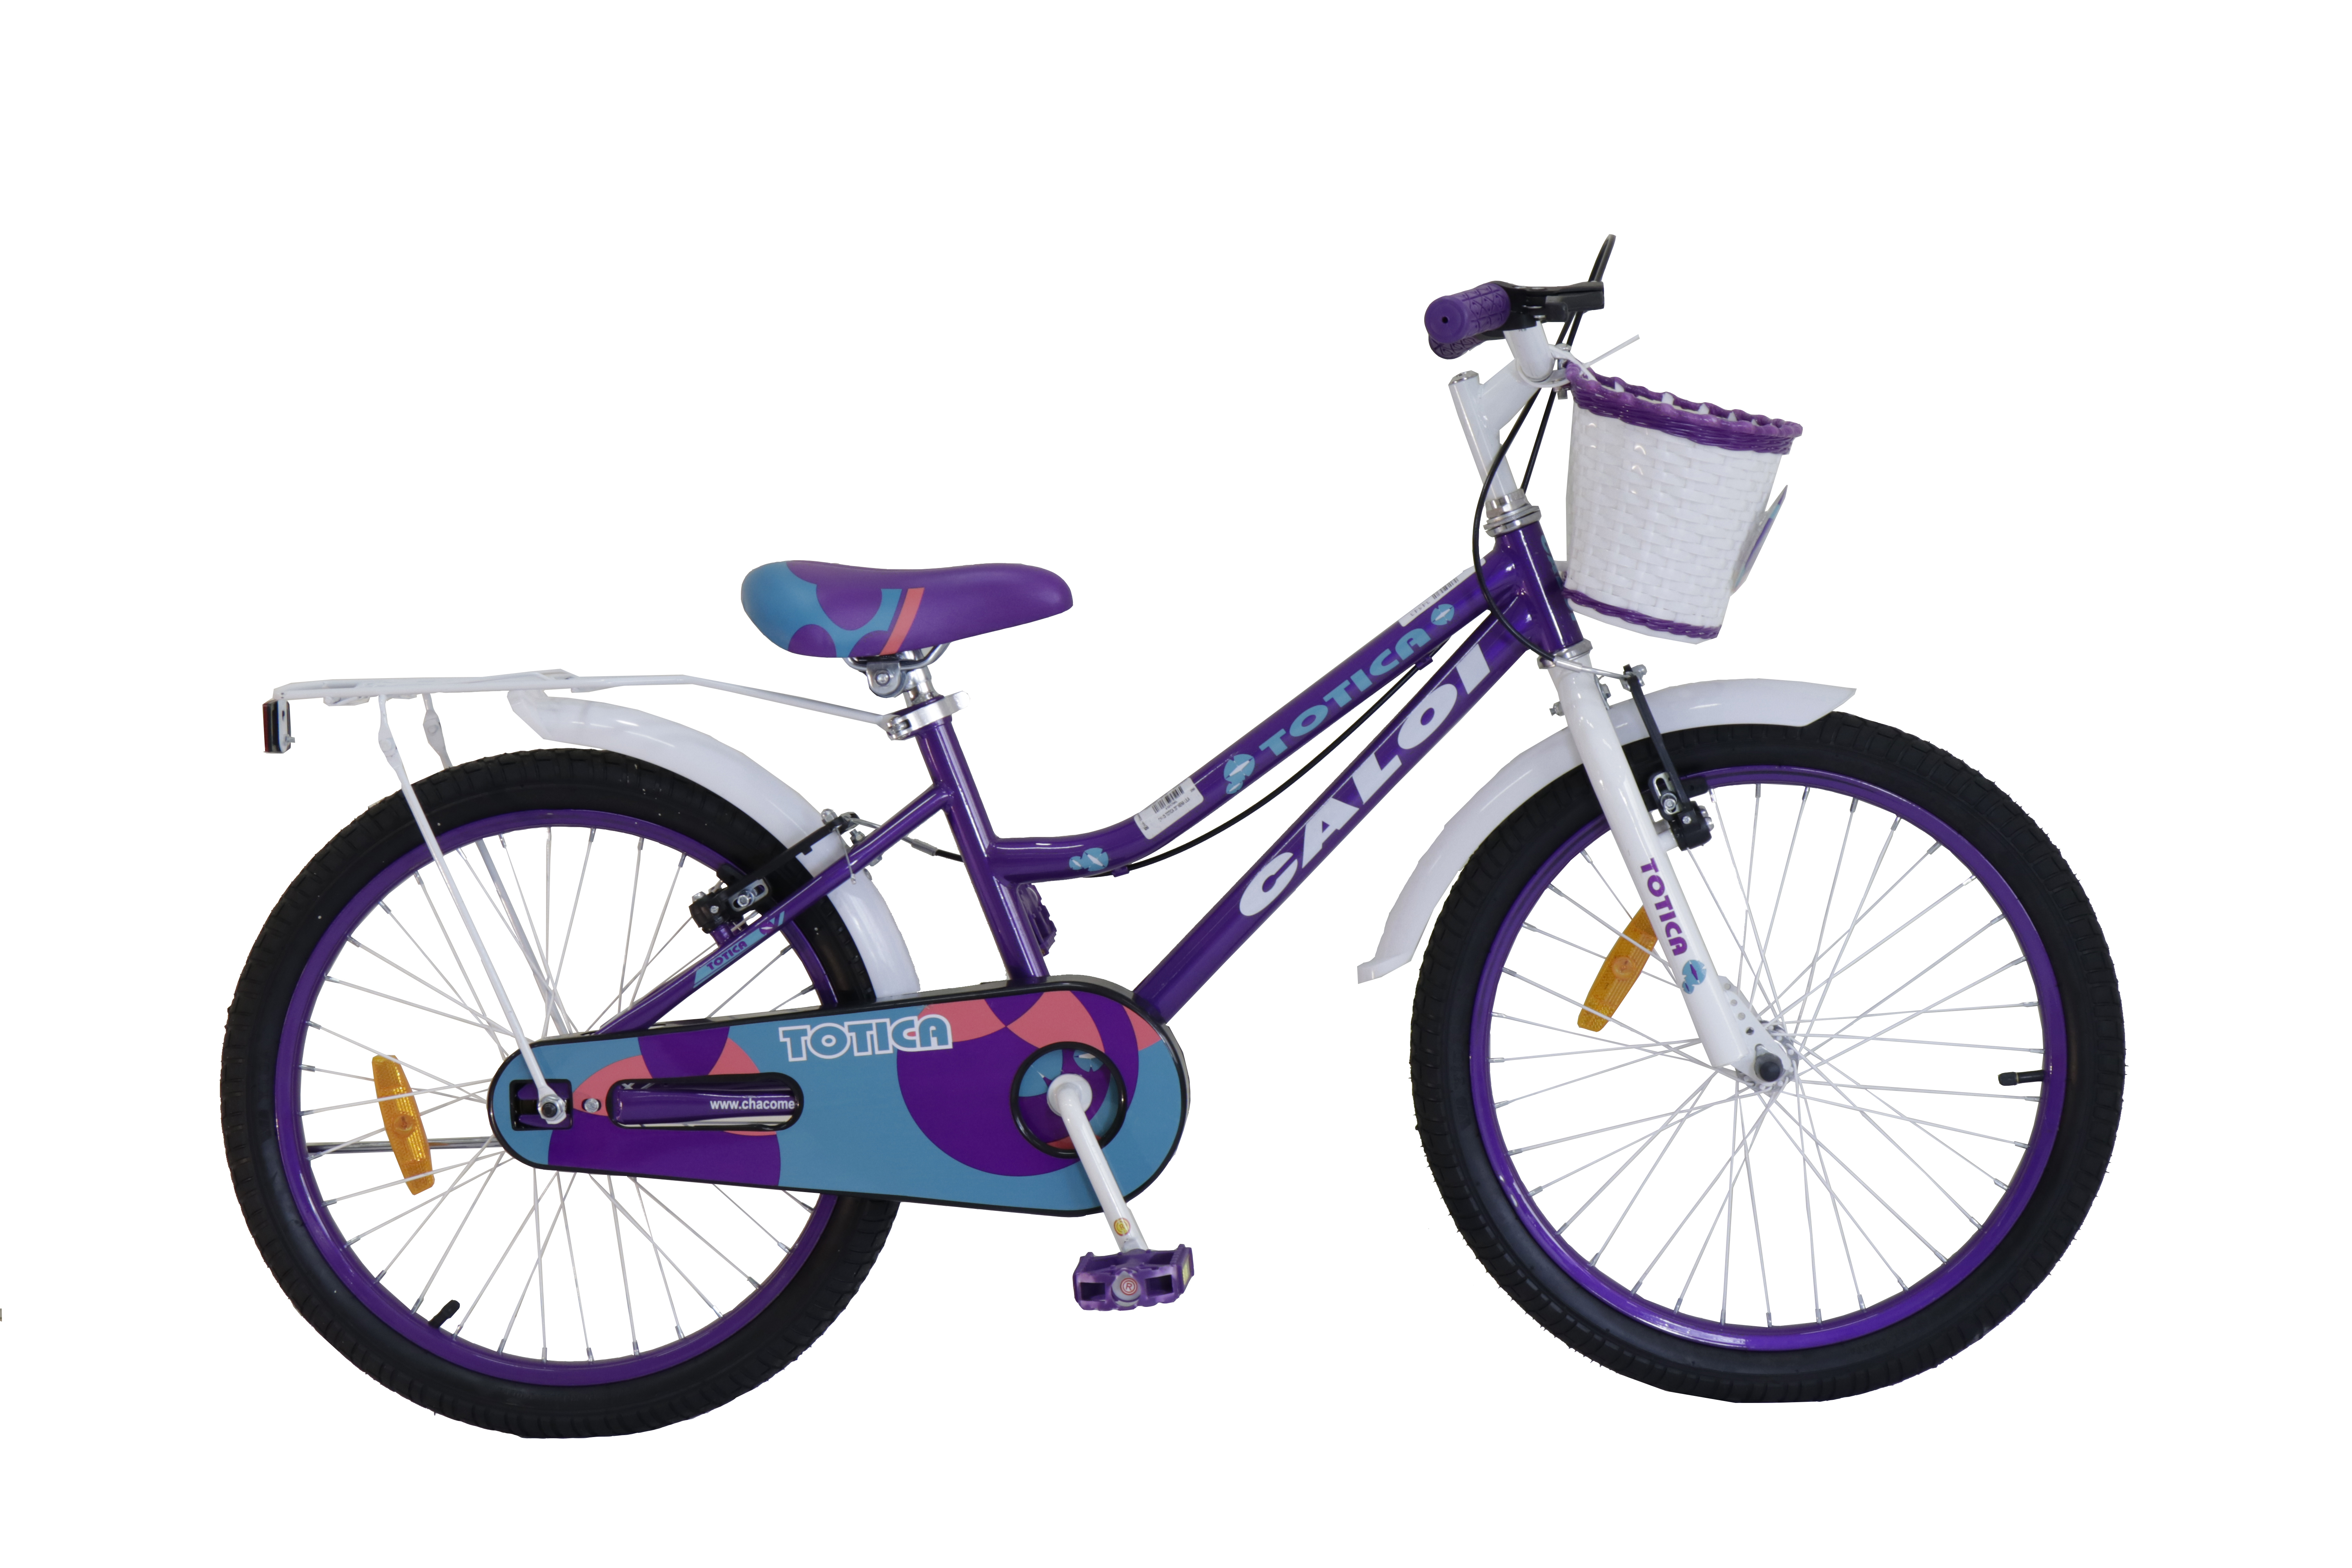 Estilo de vida de bicicletas. elegantes bicicletas con estilo lila con cesta.  la bicicleta de niña se parece a la bicicleta de mamá